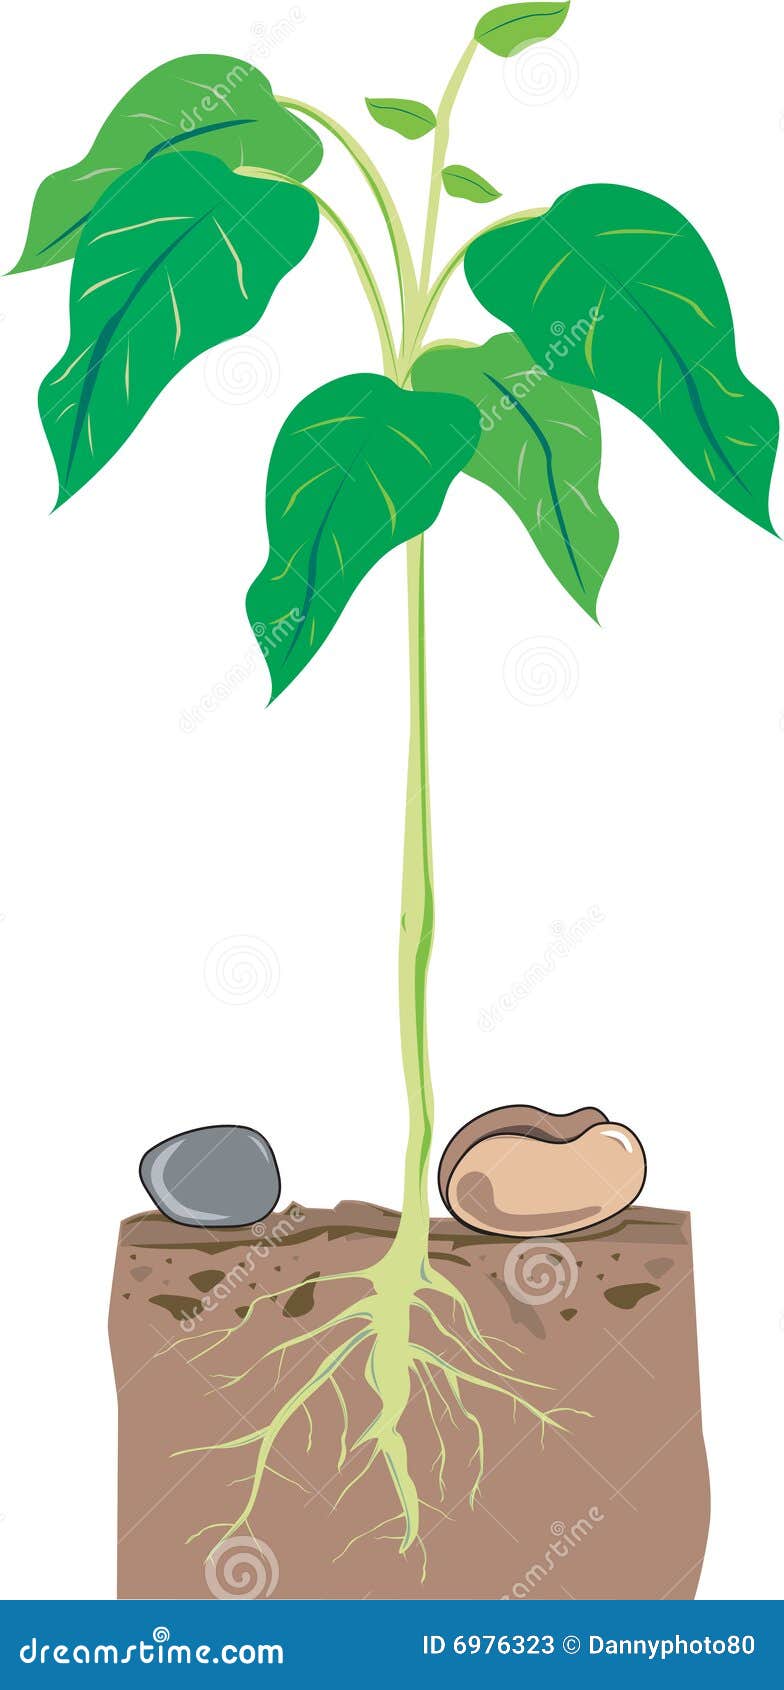 Bean plant stock illustration. Illustration of draw, tree - 6976323